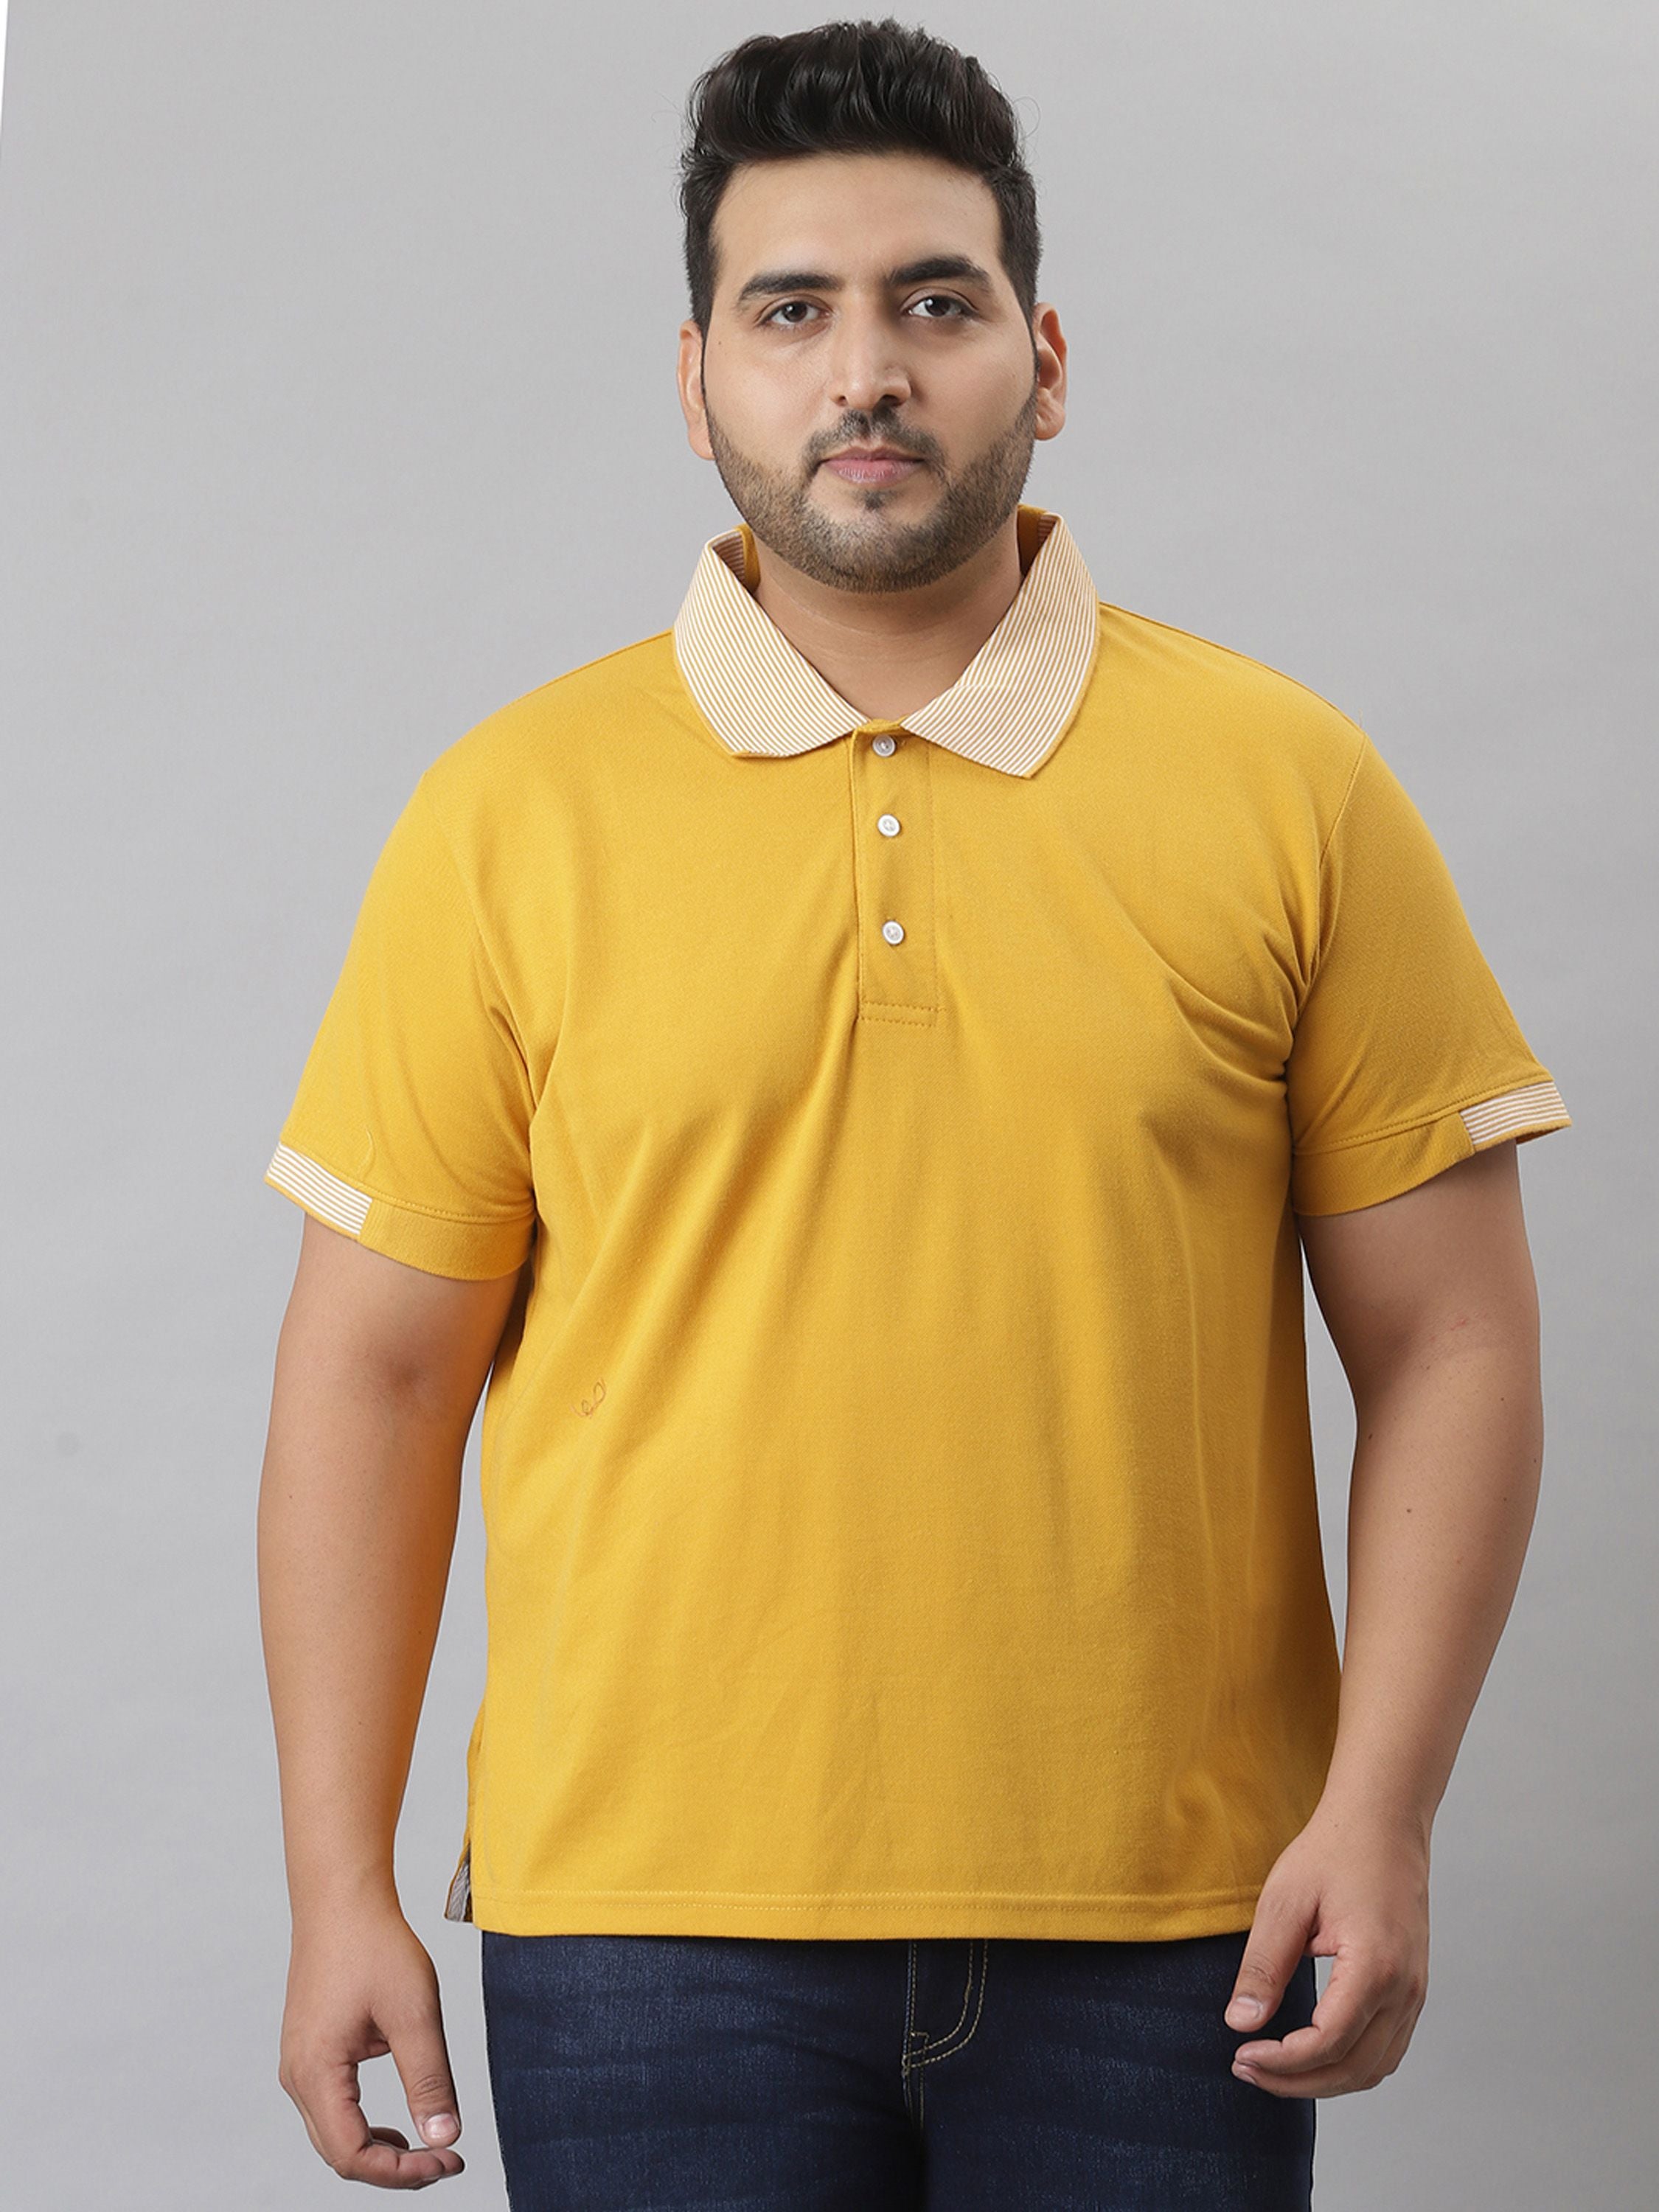 Plus Men Solid Stylish Half Sleeve Casual T-Shirt Yellow